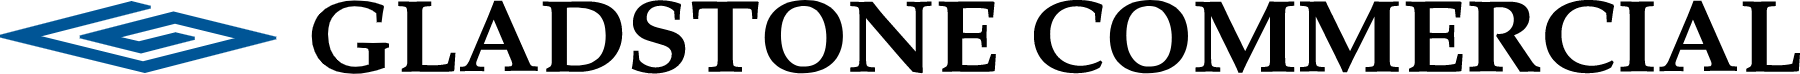 Gladstone Commercial logo large (transparent PNG)